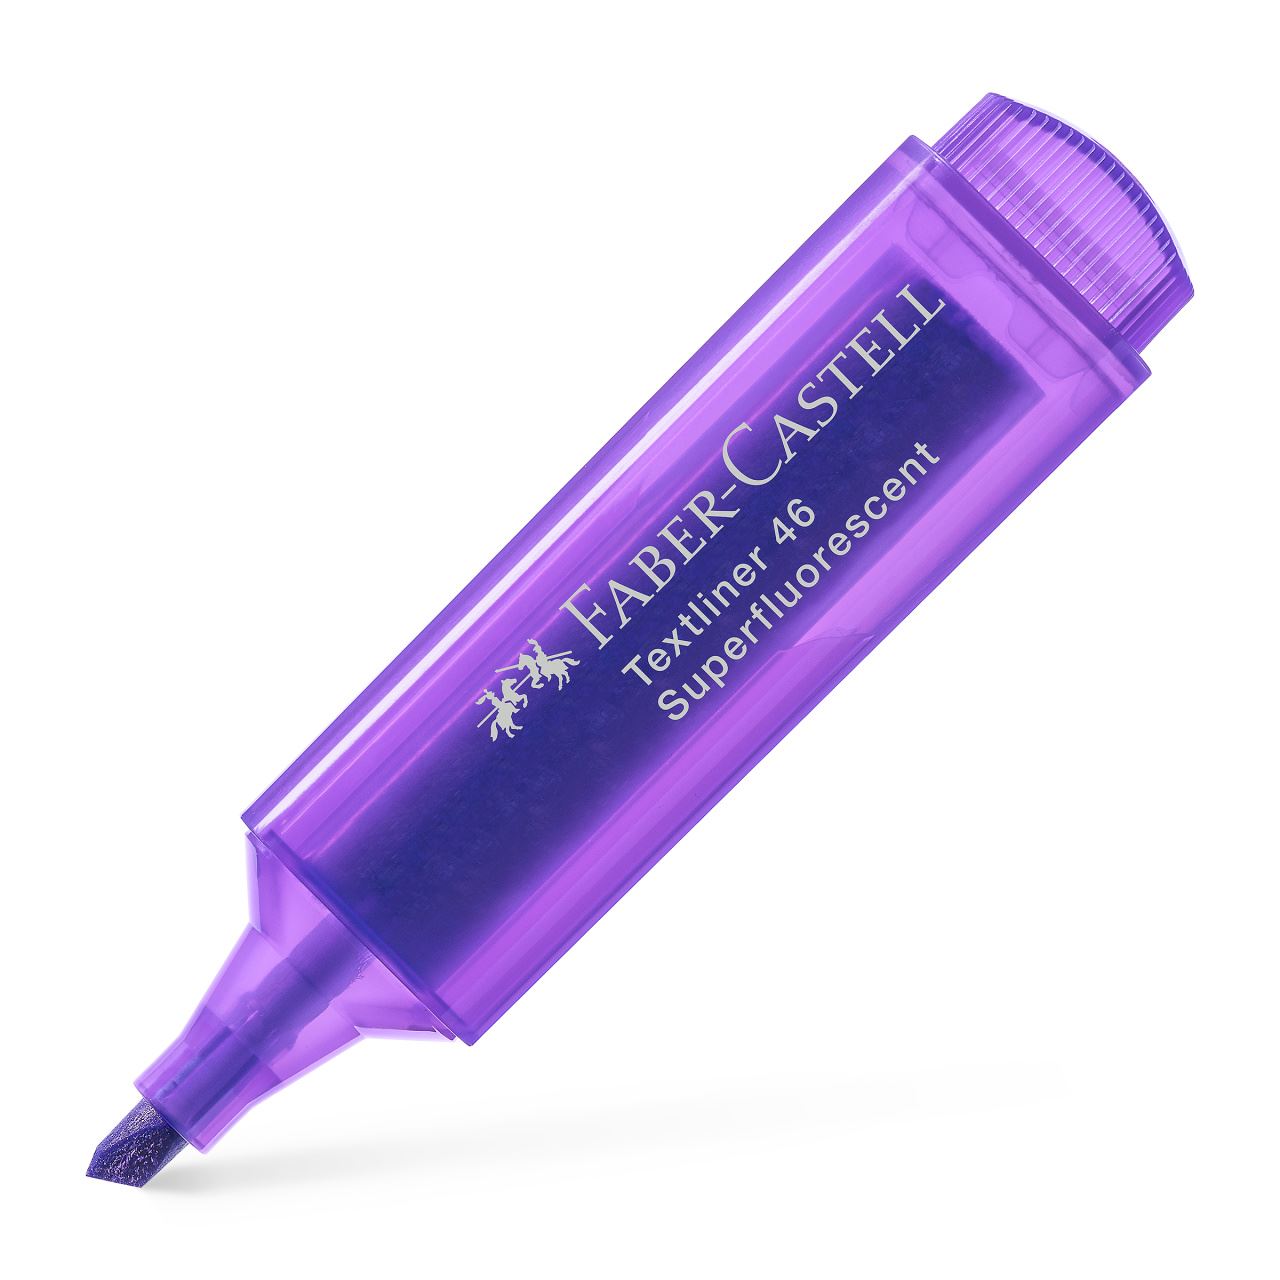 Faber-Castell - Textliner 46 Superflourescent, violett